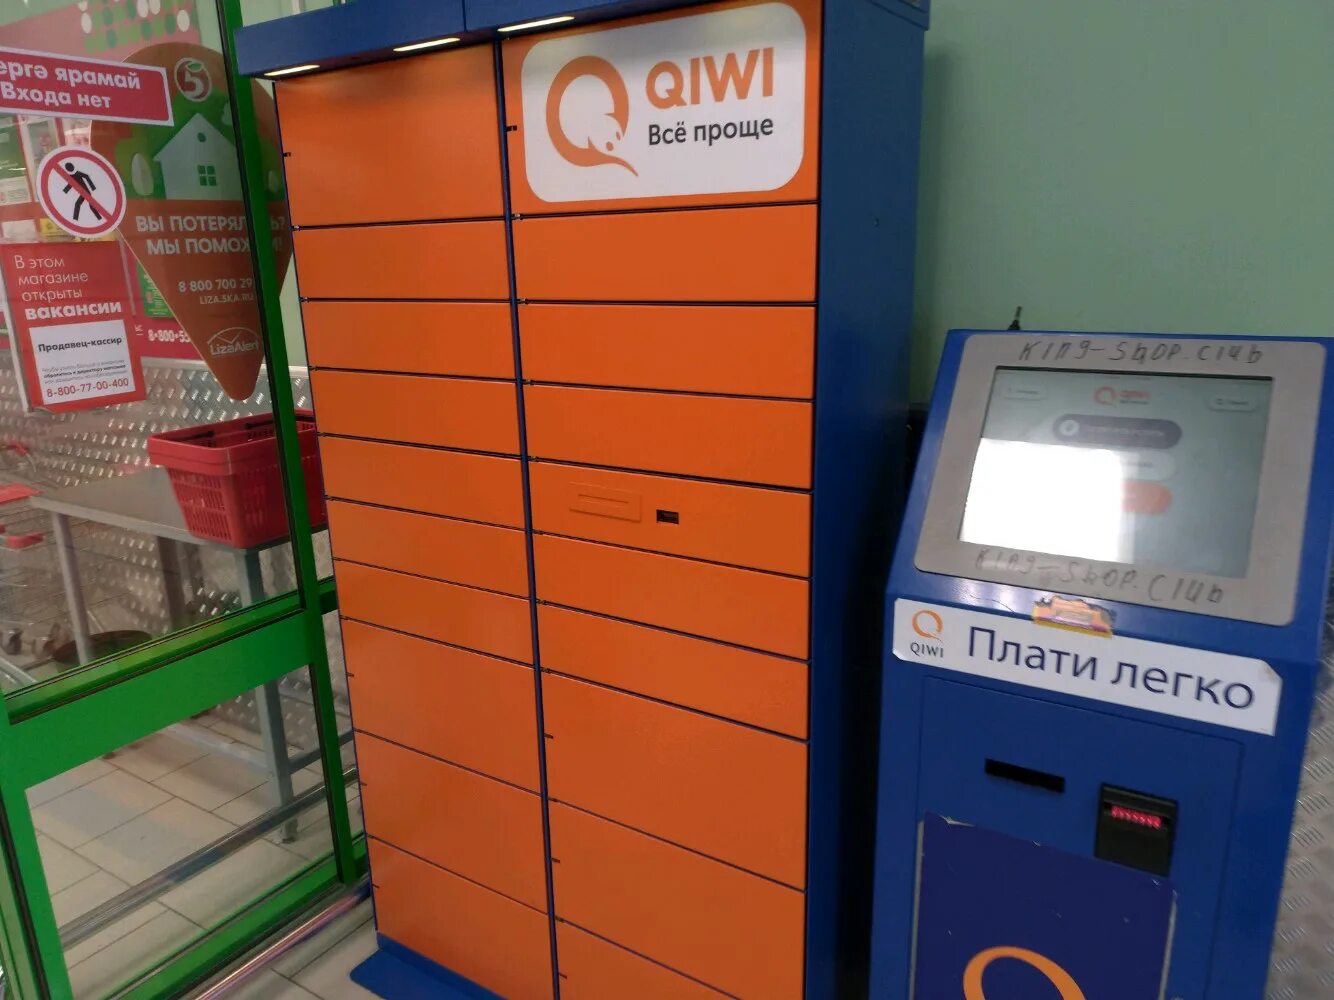 Игровой автомат qiwi на iphone. QIWI терминал. Уфа терминал. QIWI Уфа. Банкоматы киви Уфа.